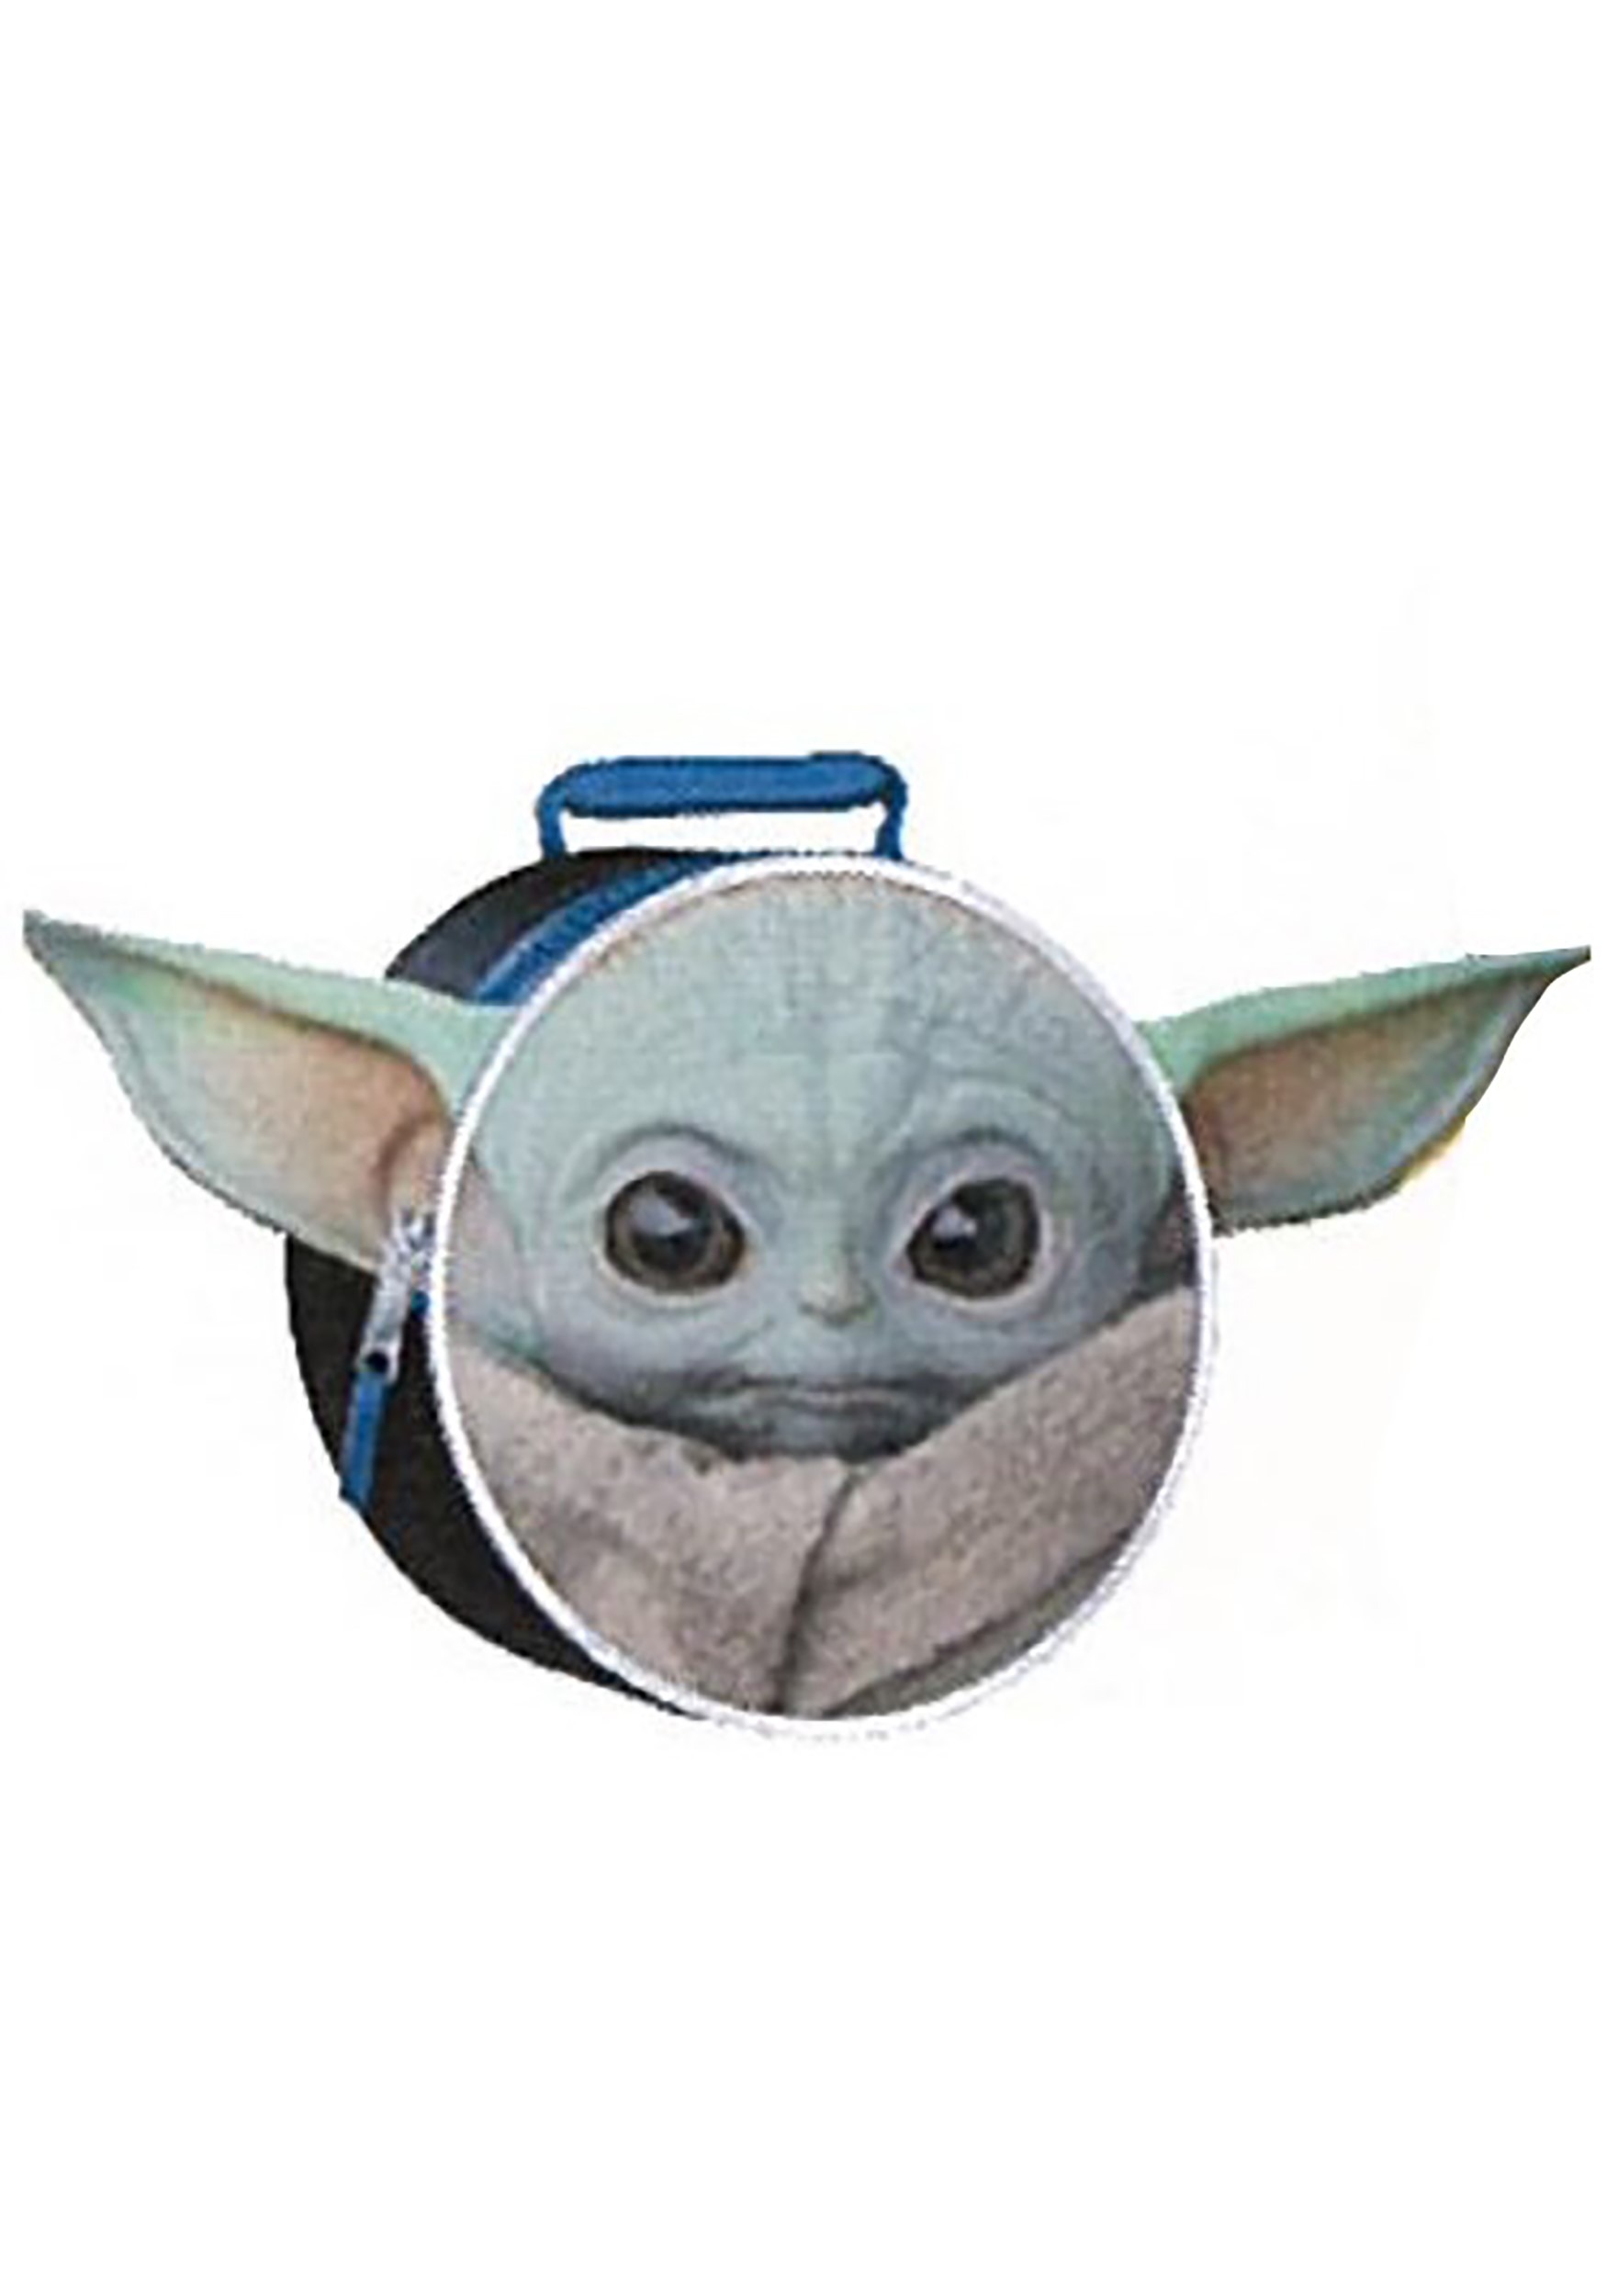 Baby Yoda - Star Wars "The Child" Circle Shaped Lunchbox